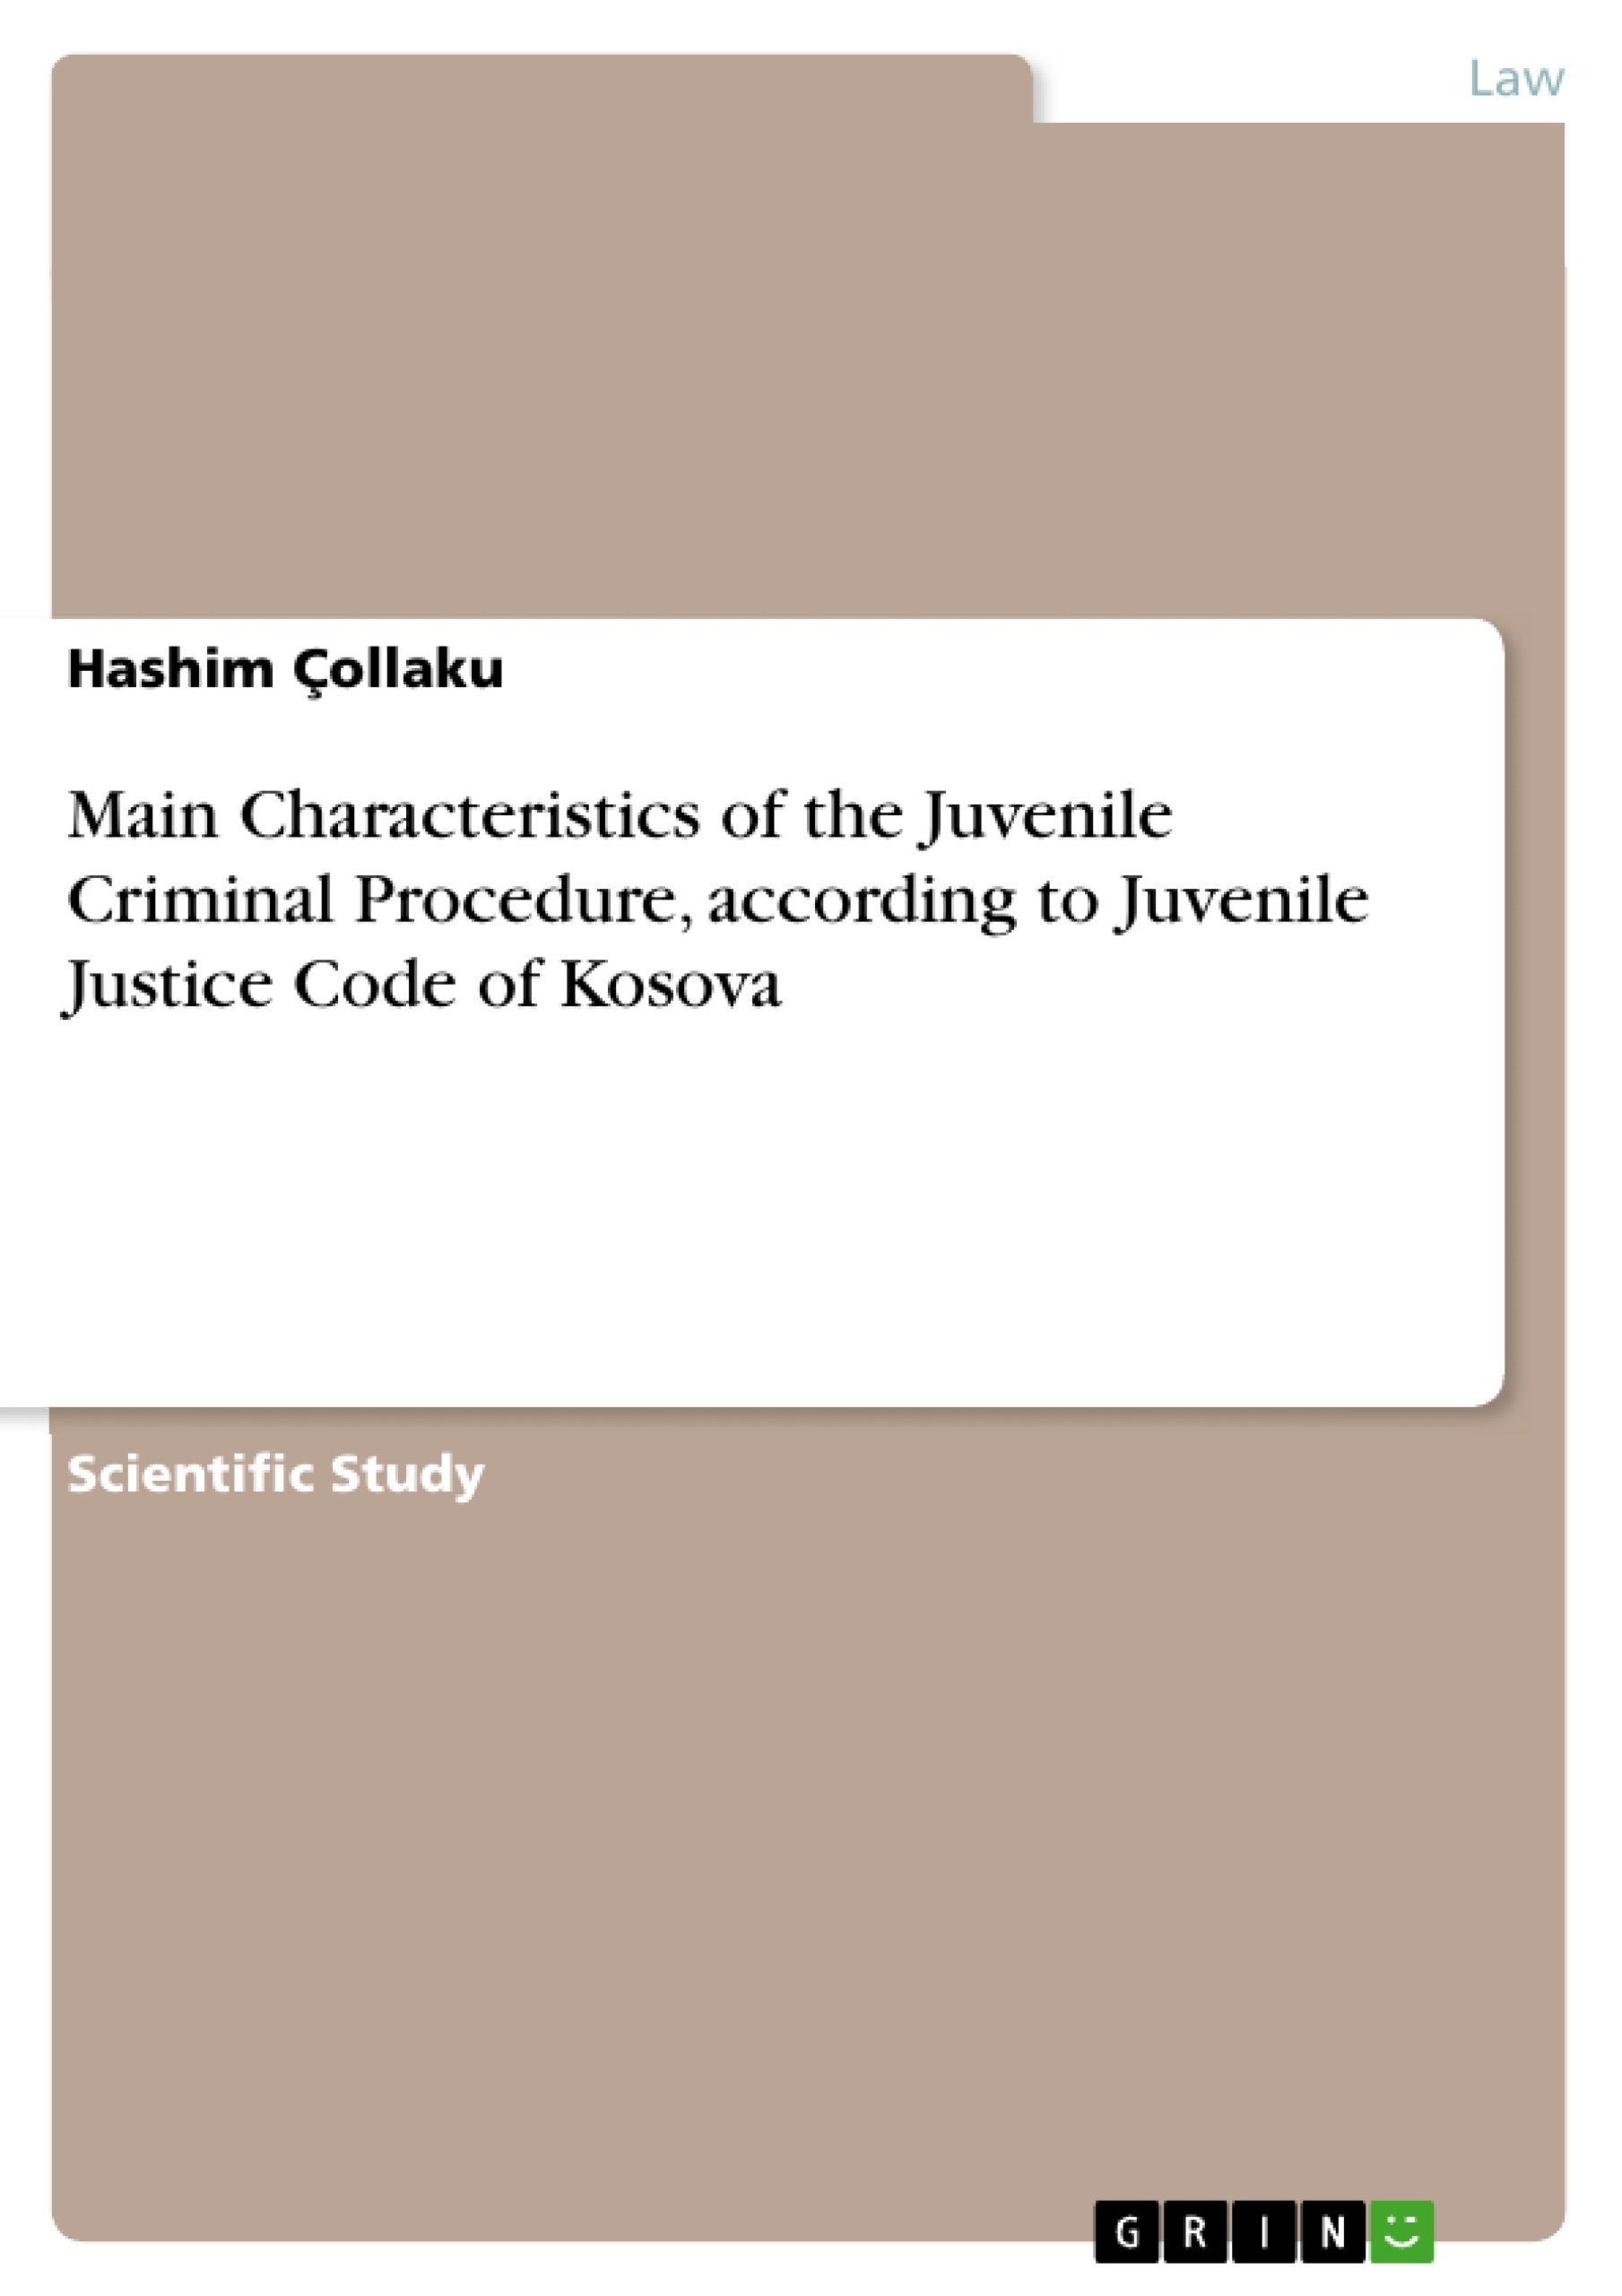 Title: Main Characteristics of the Juvenile Criminal Procedure, according to Juvenile Justice Code of Kosova